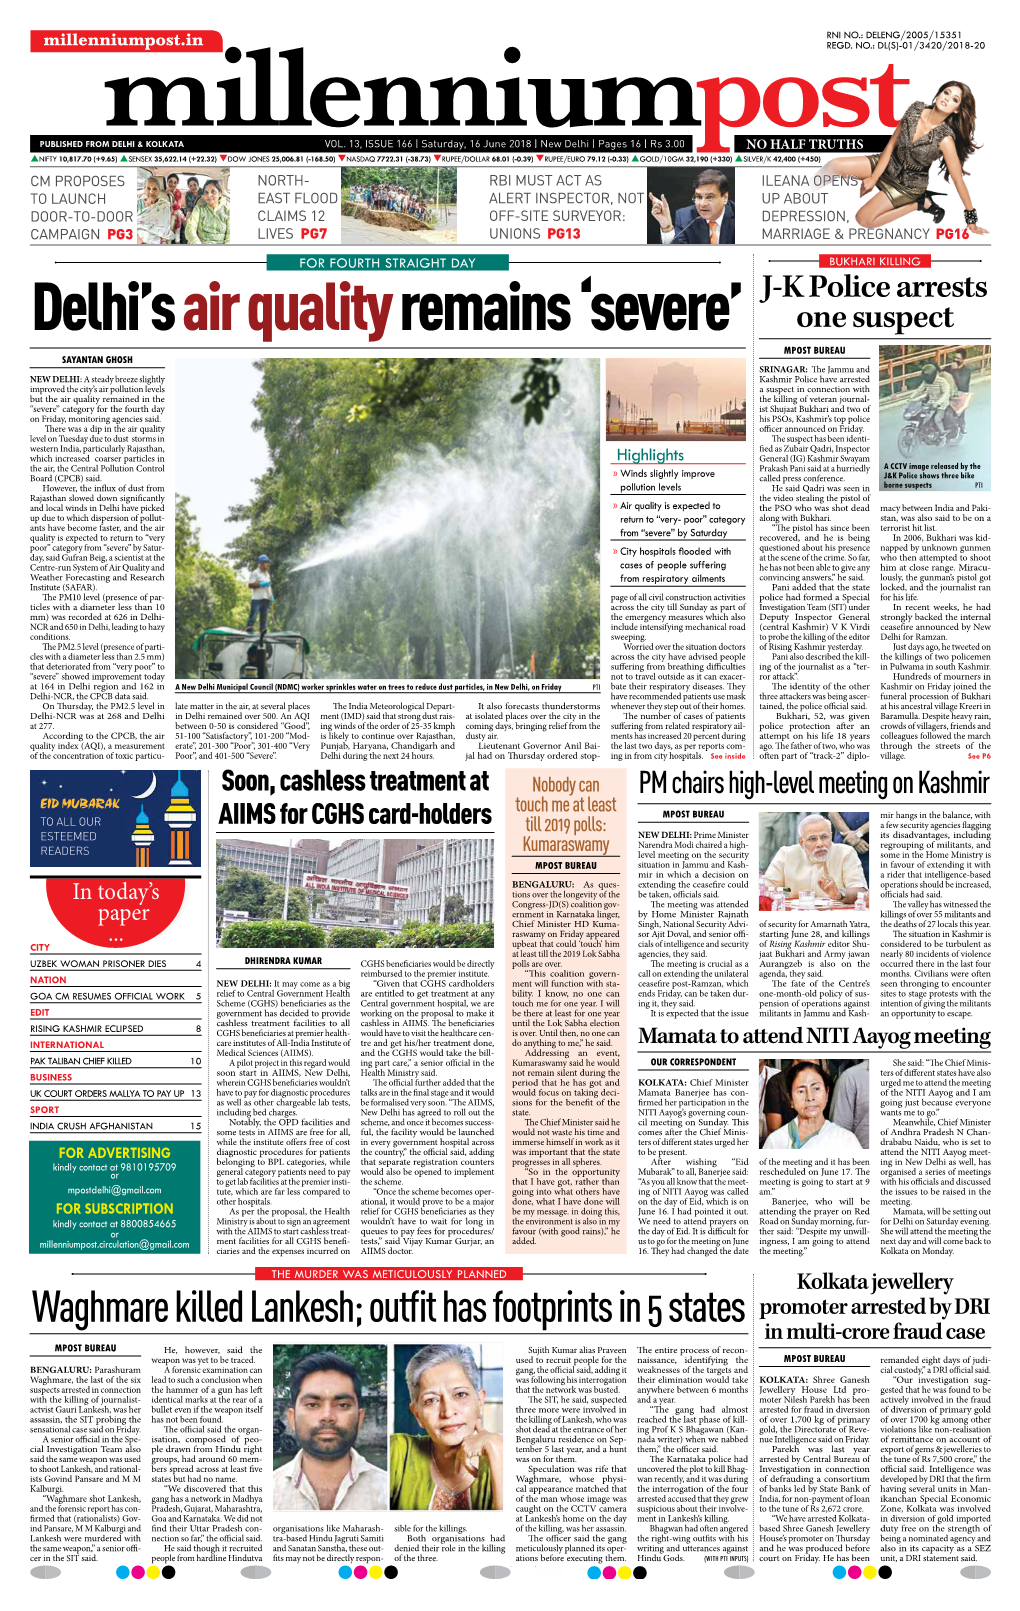 Delhi's Air Quality Remains 'Severe'